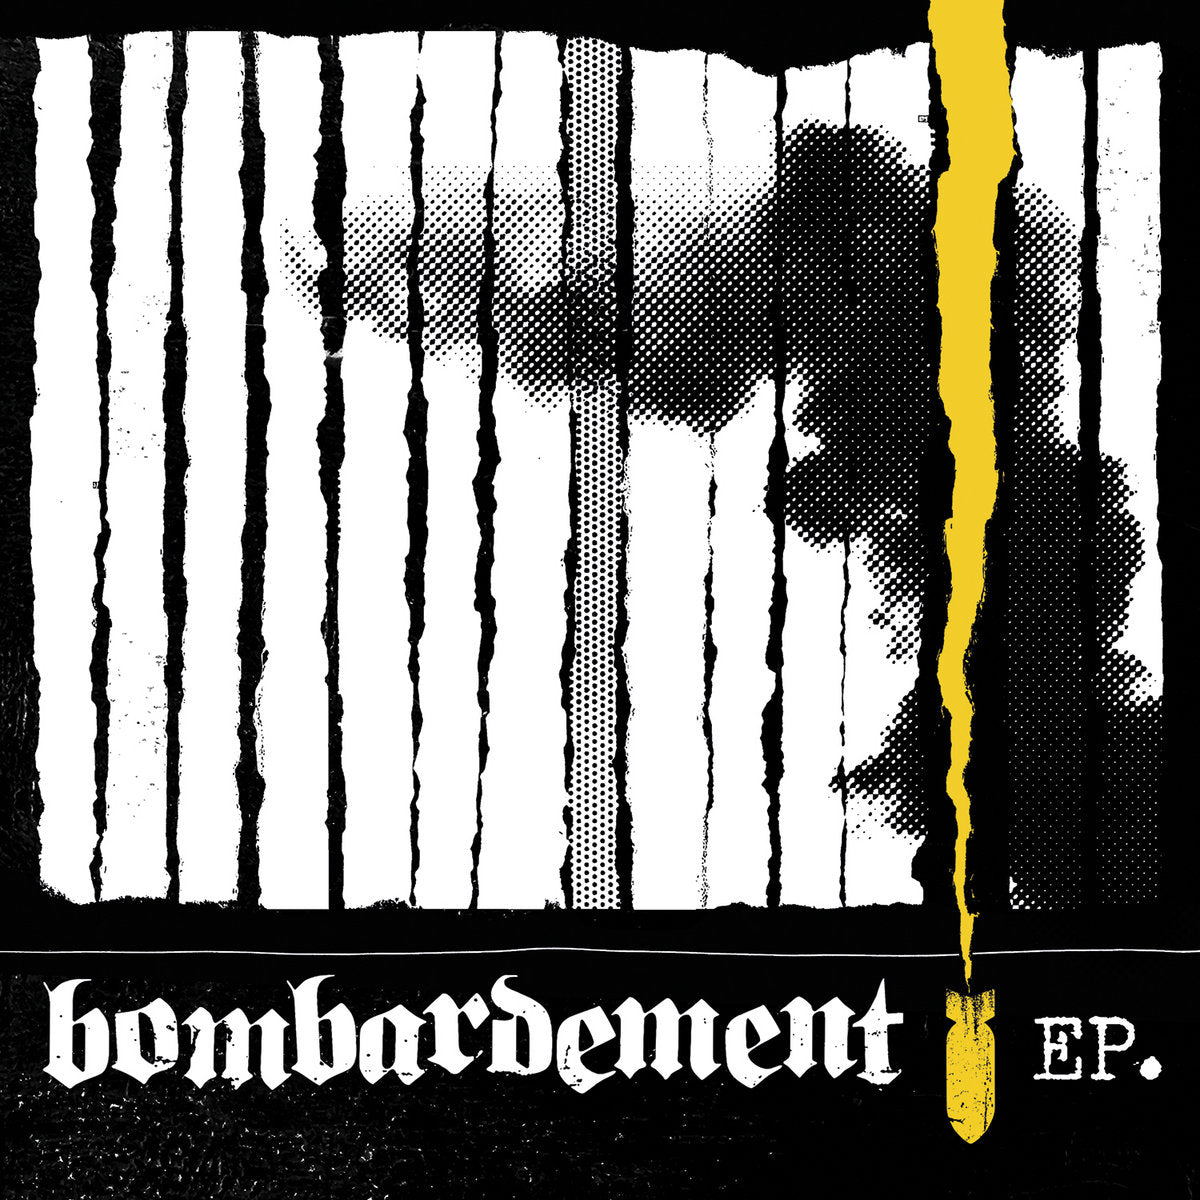 Bombardement - EP. 7" - Vinyl - Symphony of Destruction